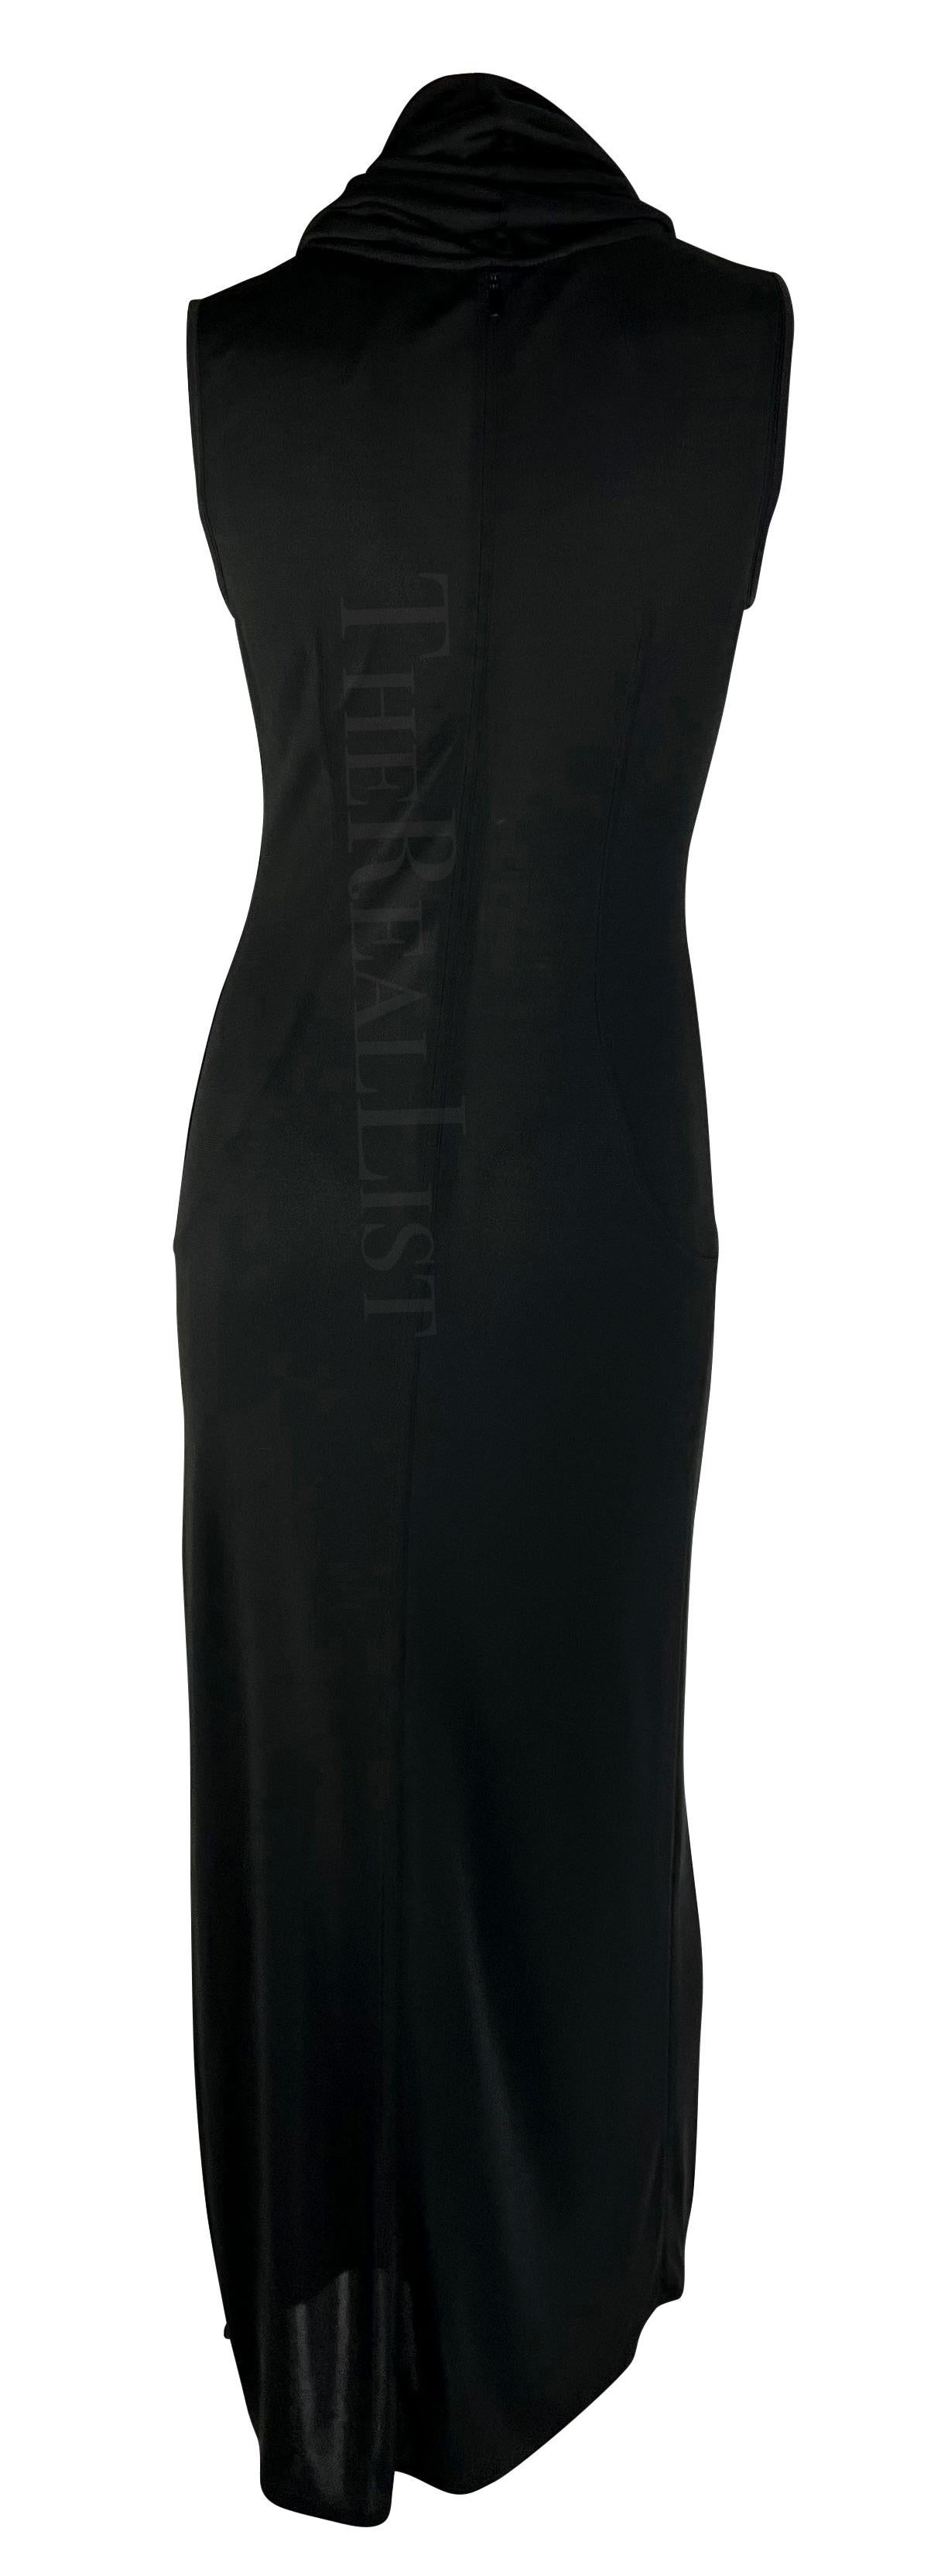 S/S 1996 Dolce & Gabbana Runway Hooded Stretch Black High Slit Dress For Sale 8